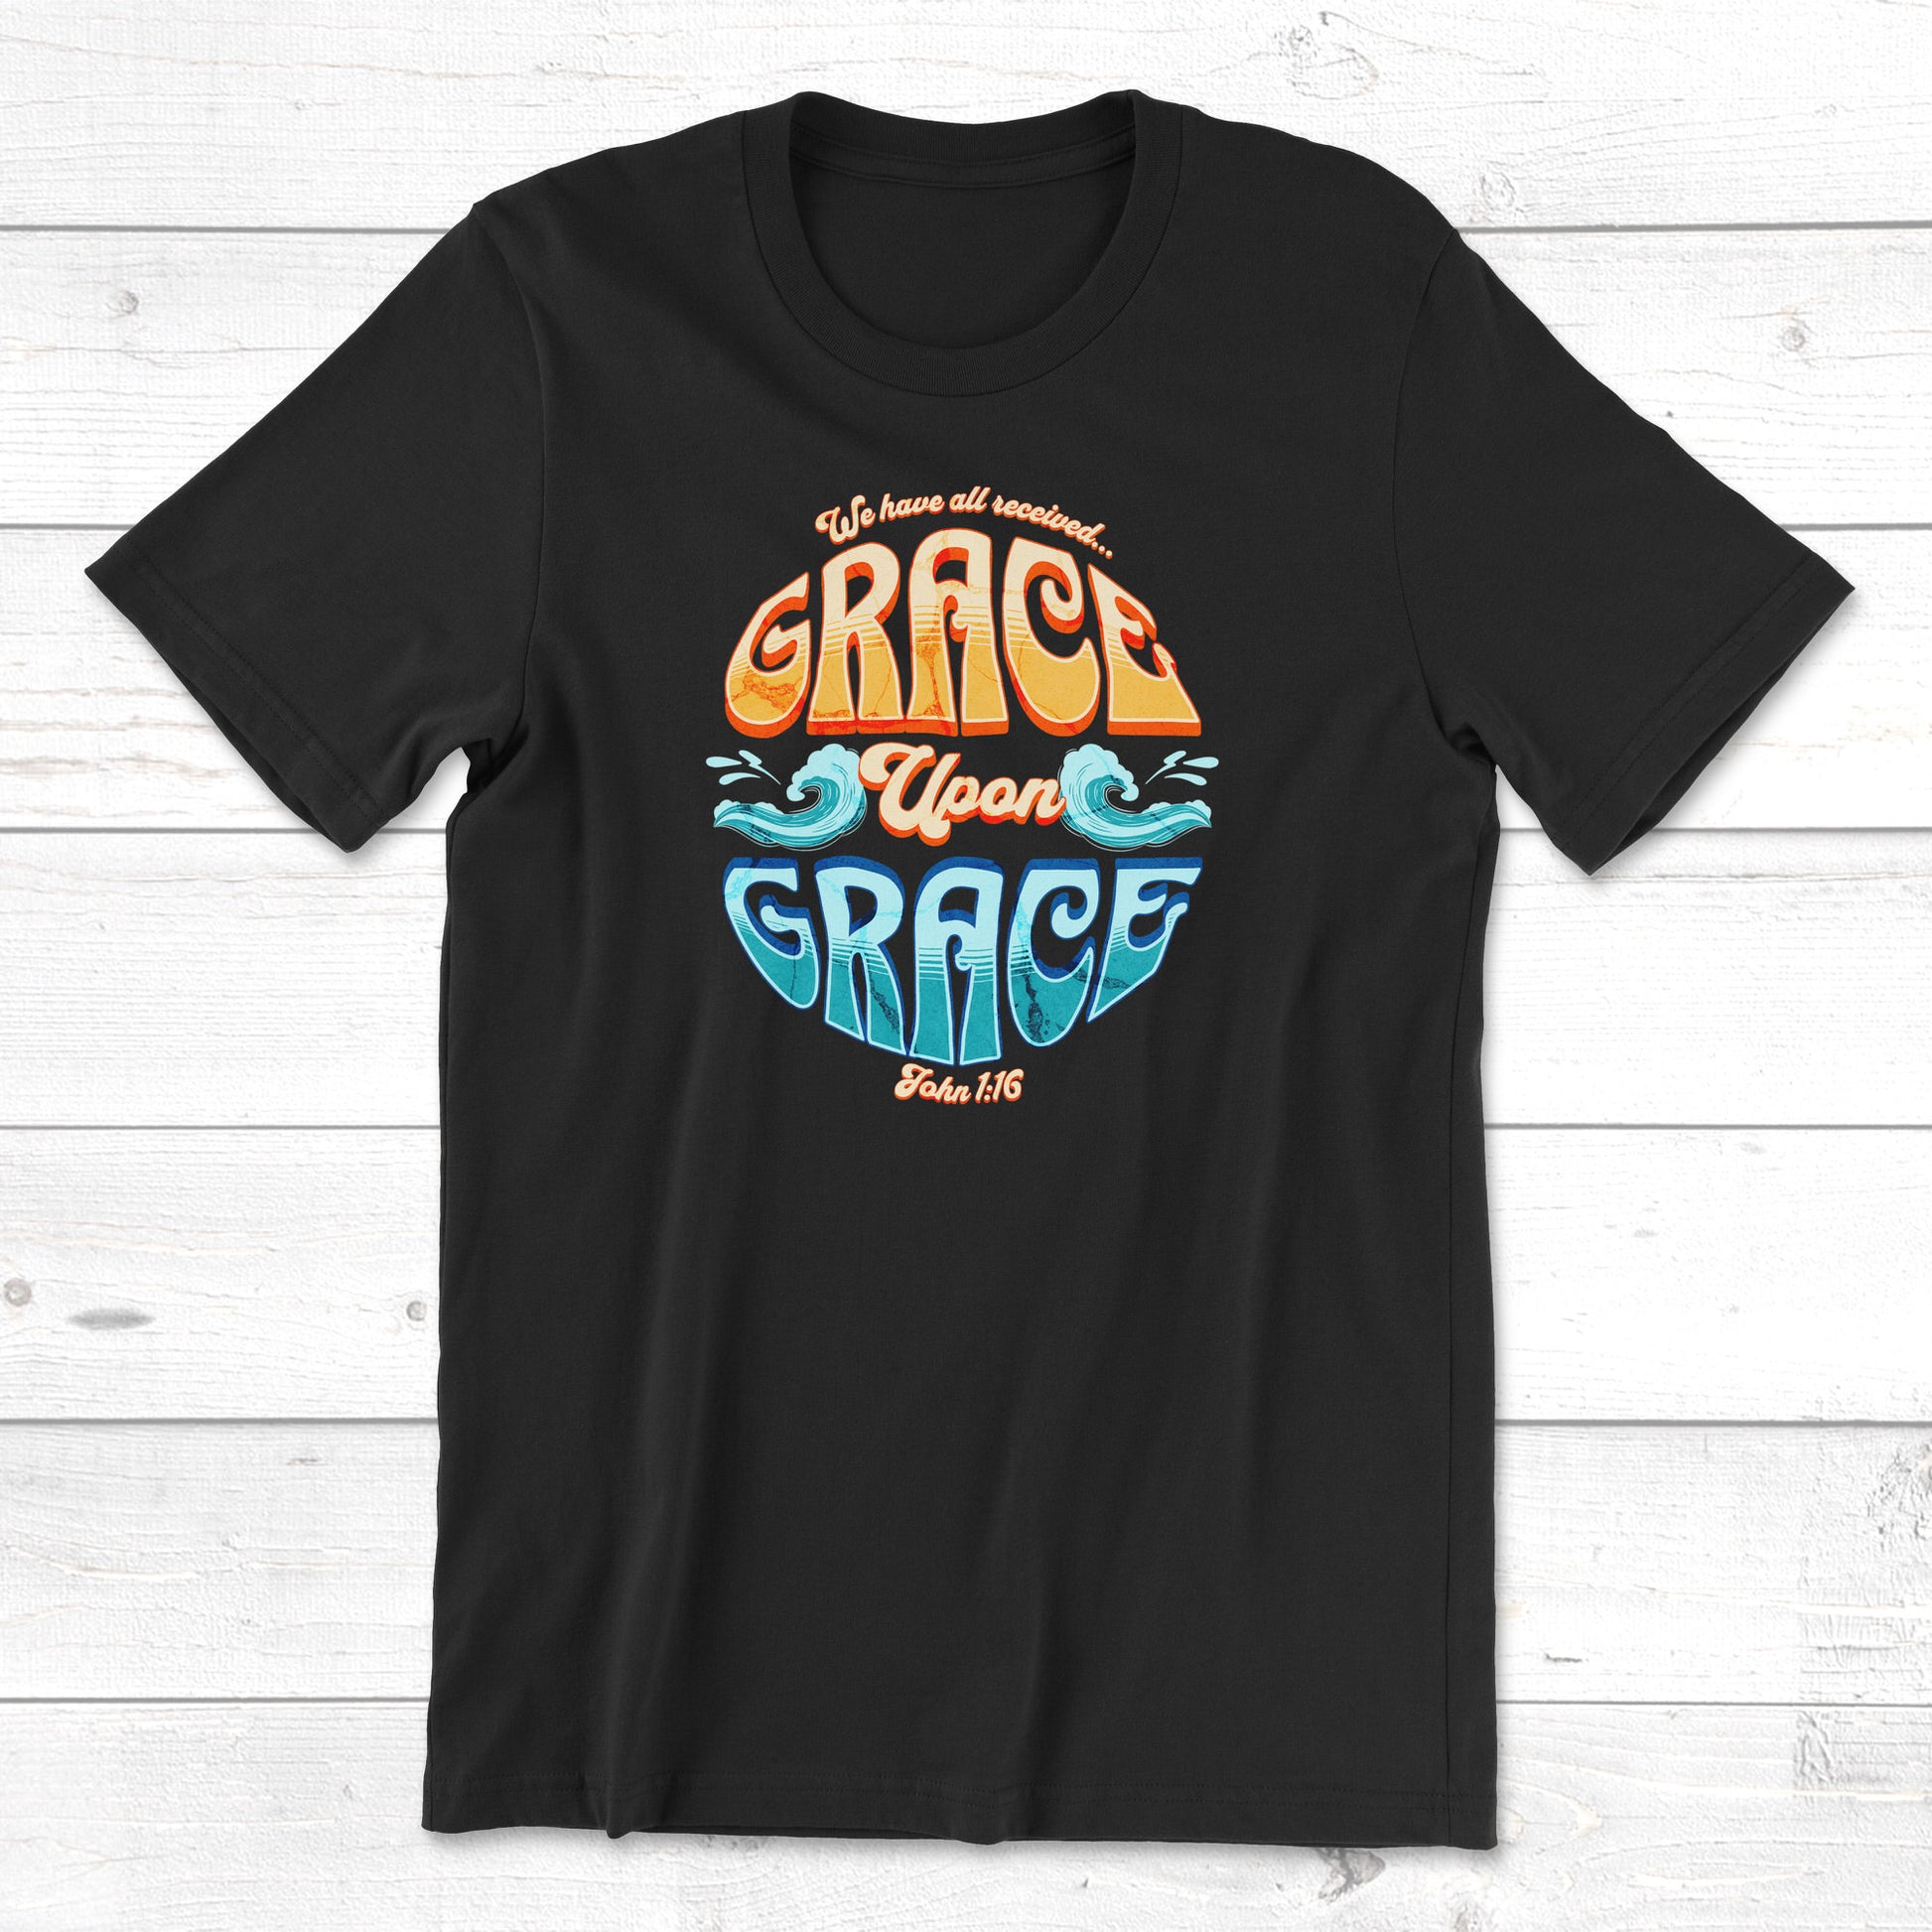 Grace Upon Grace t-shirt in Vintage Black